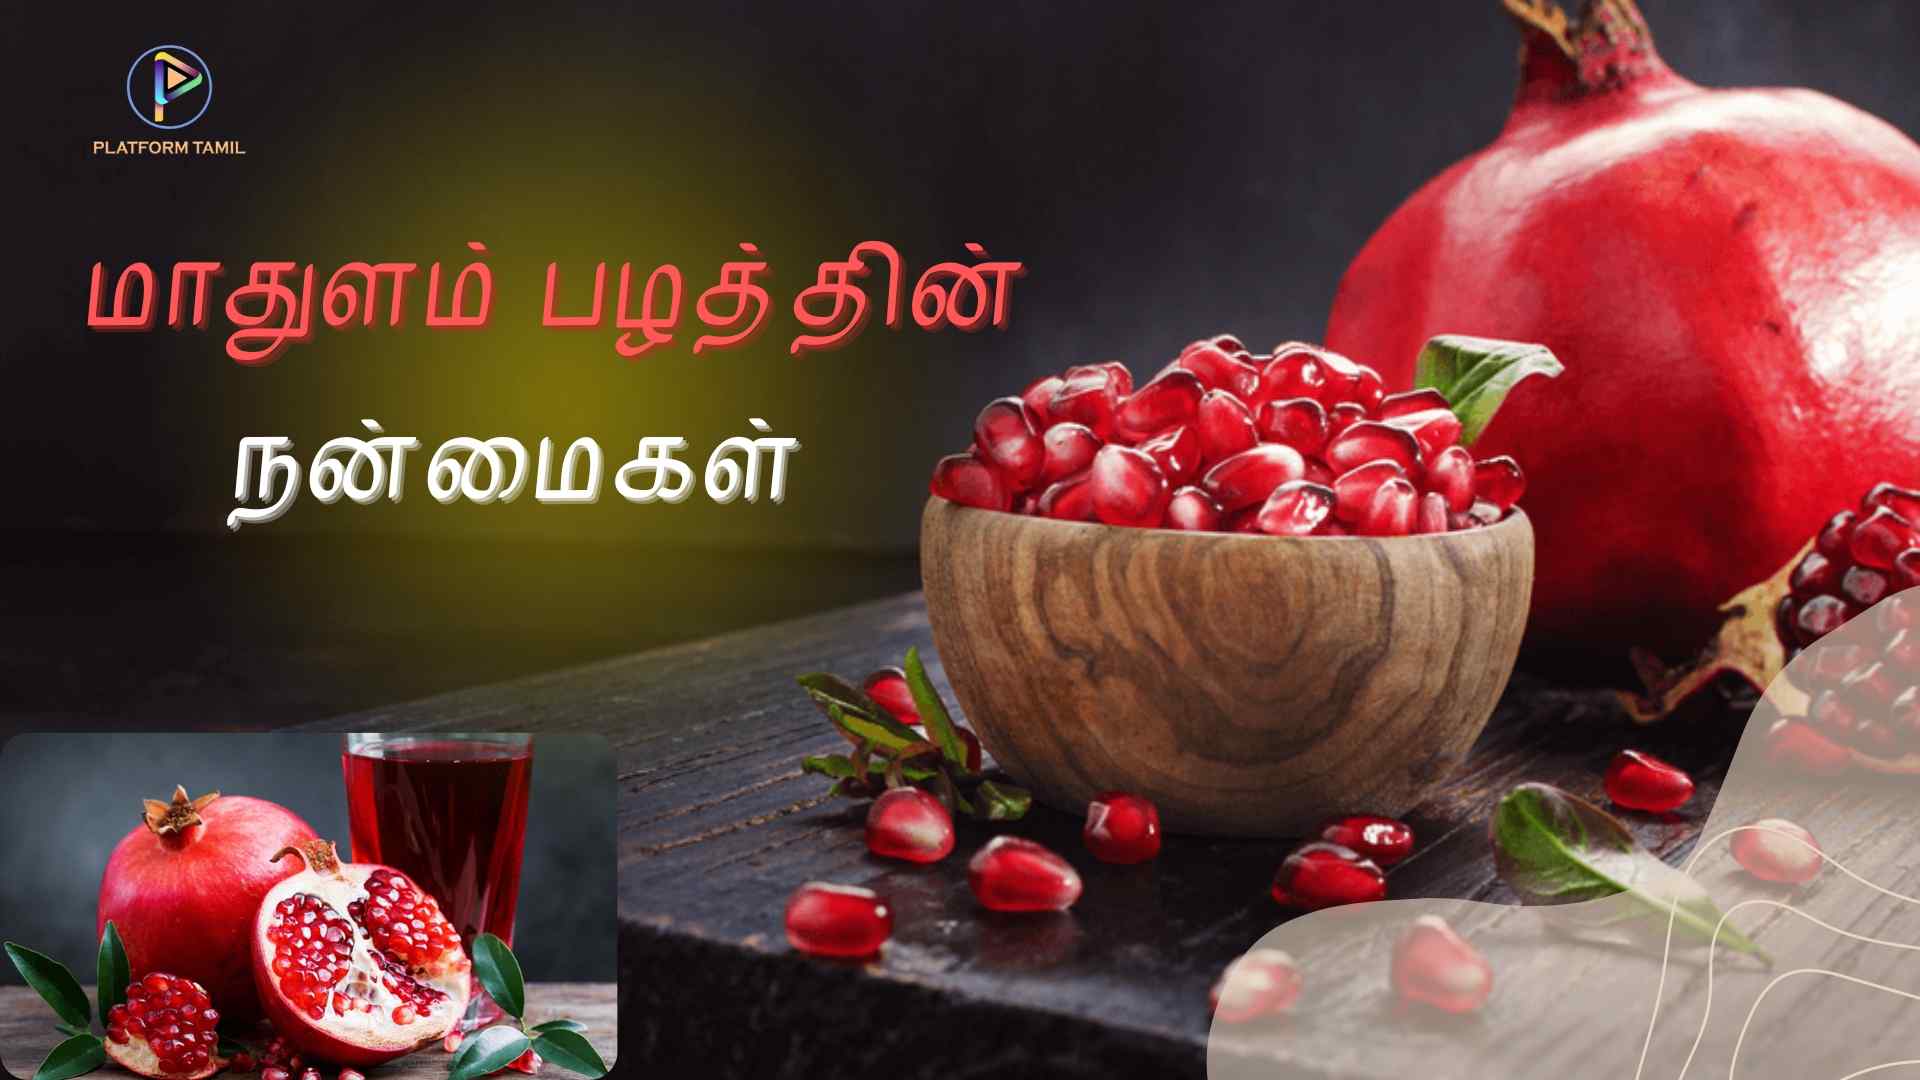 Benefits of Pomegranate in Tamil - மாதுளம் பழம் பயன்கள் - Platform Tamil